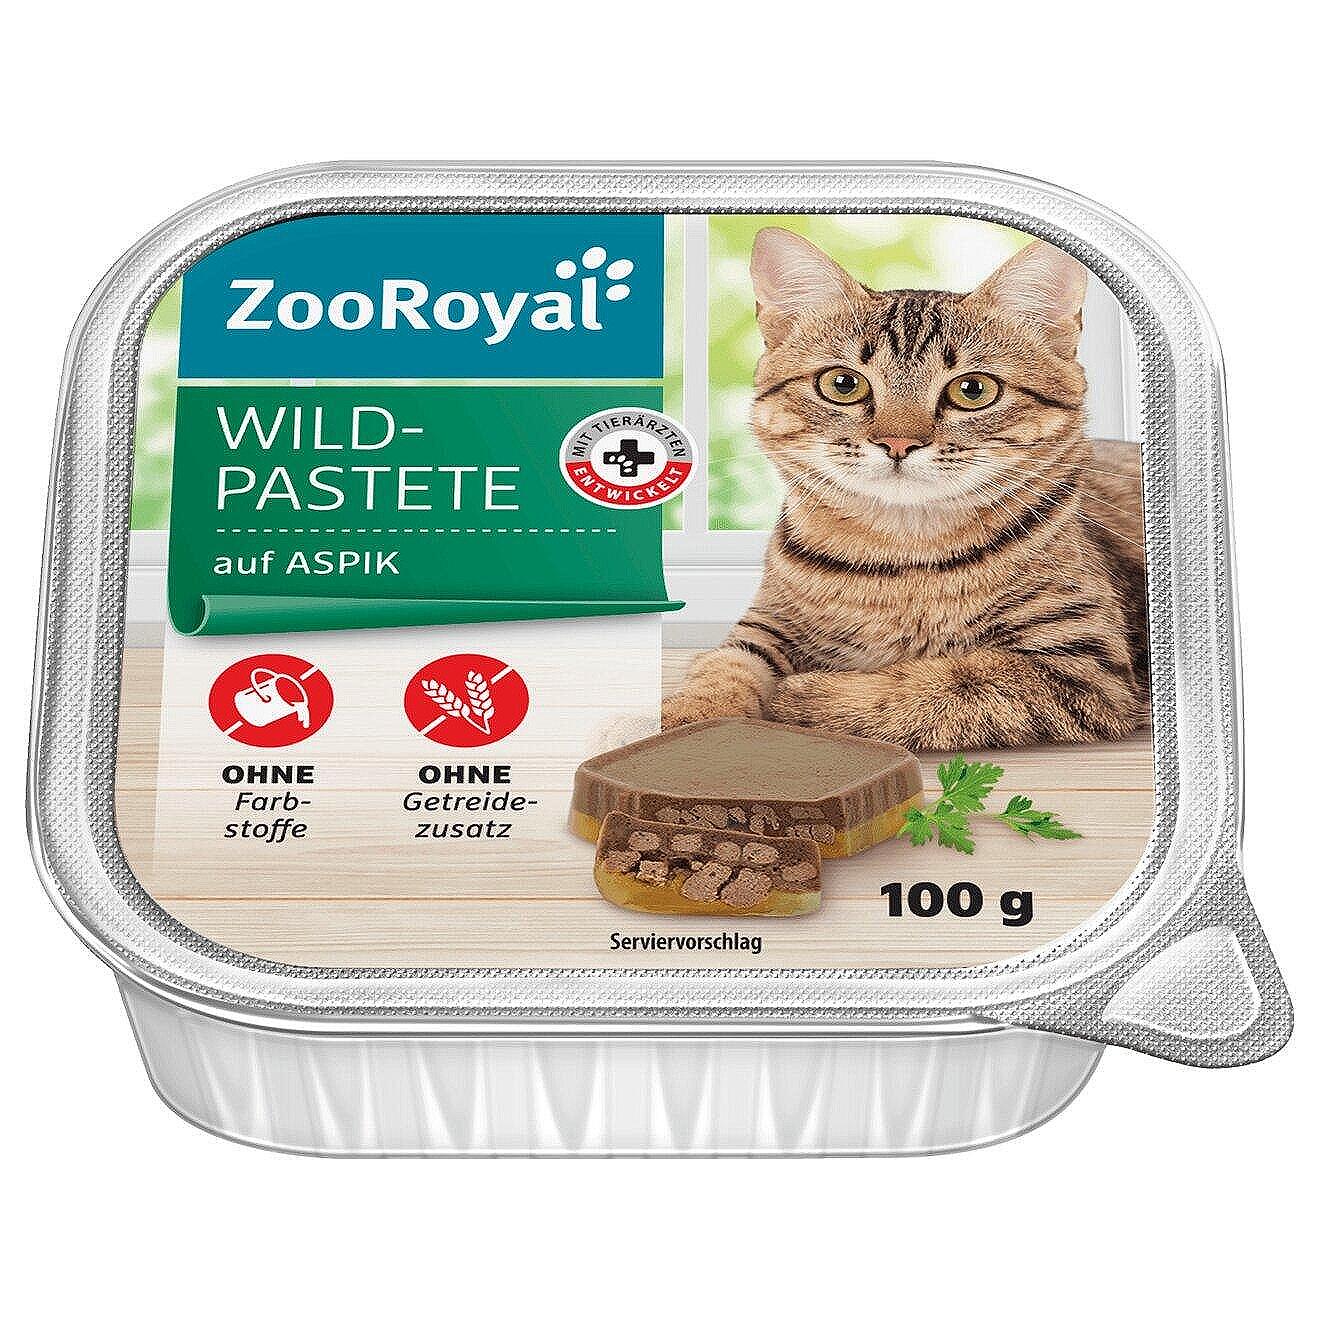 ZooRoyal котешка храна пастет с дивечово месо в аспик | 100 г